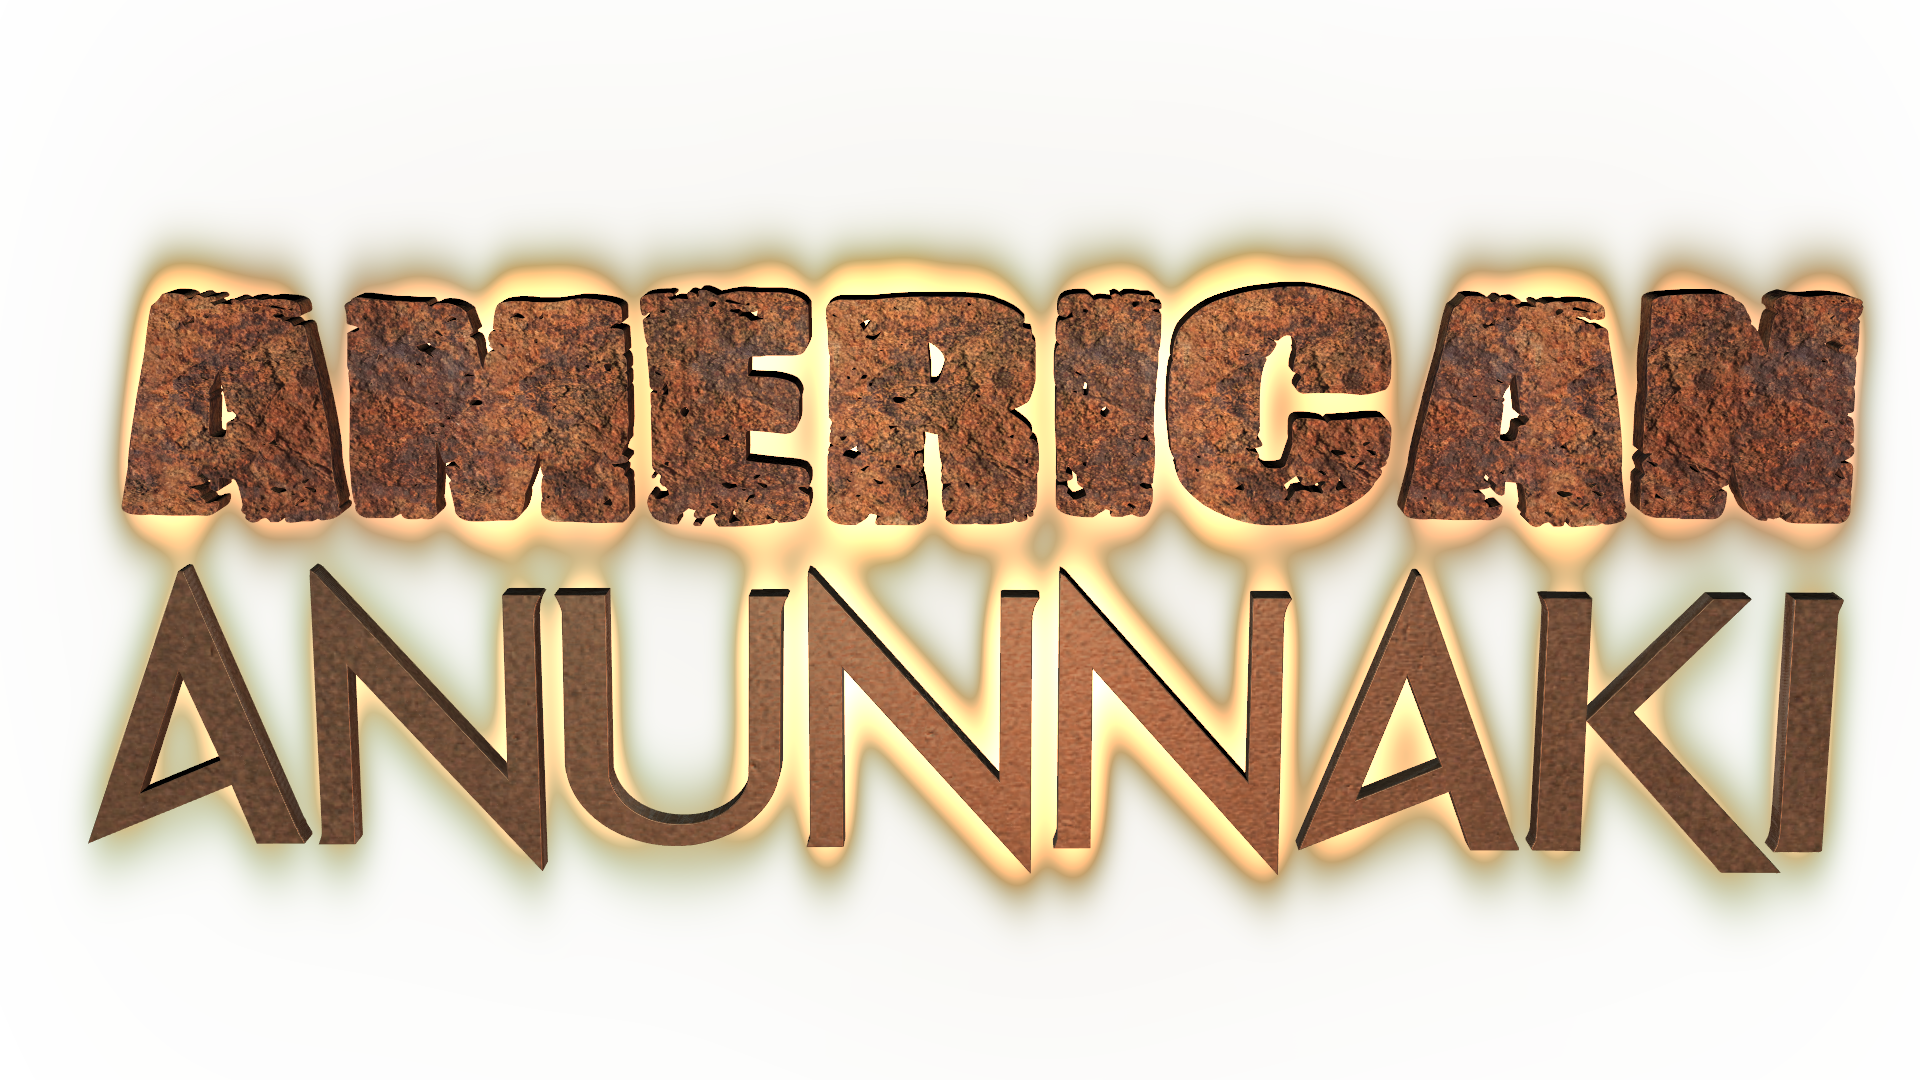 American Anunnaki